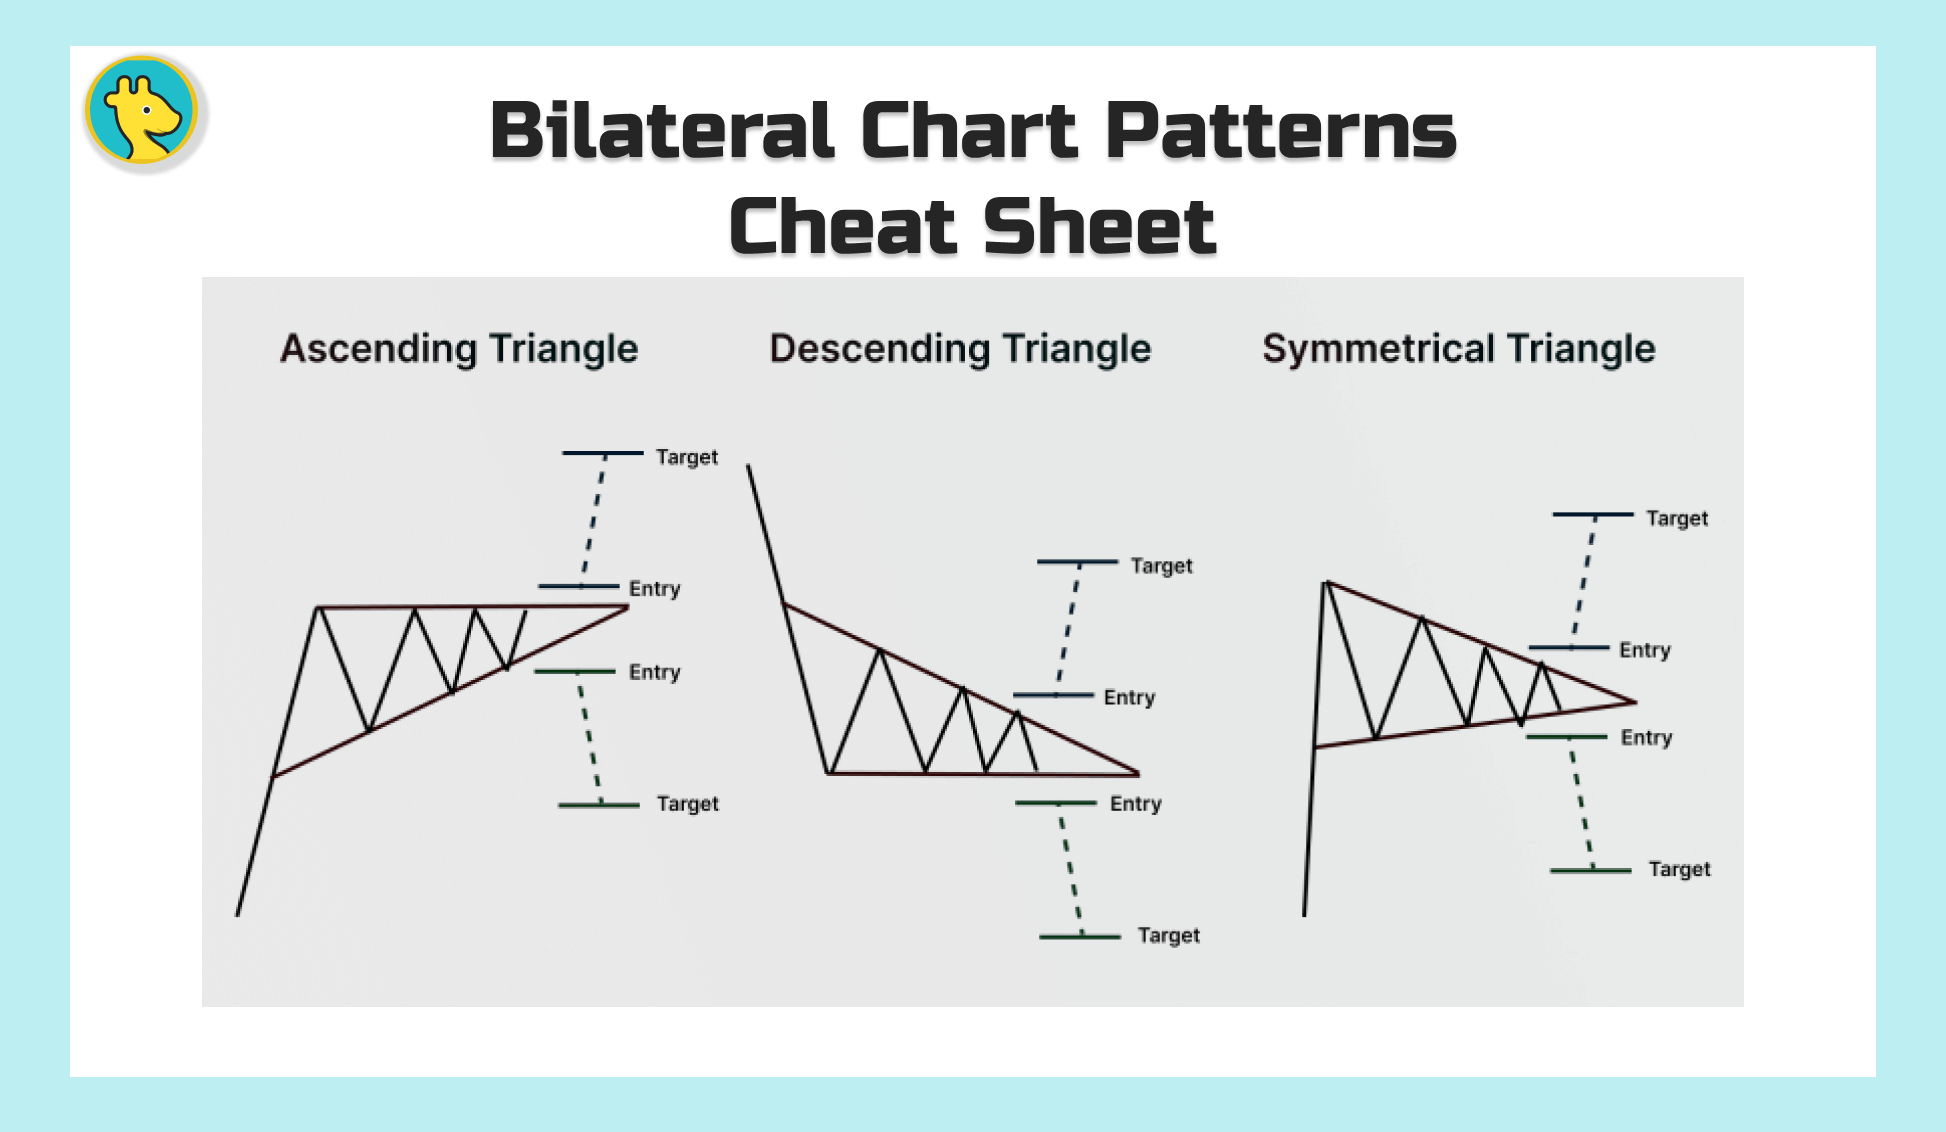 Bilateral Chart Patterns